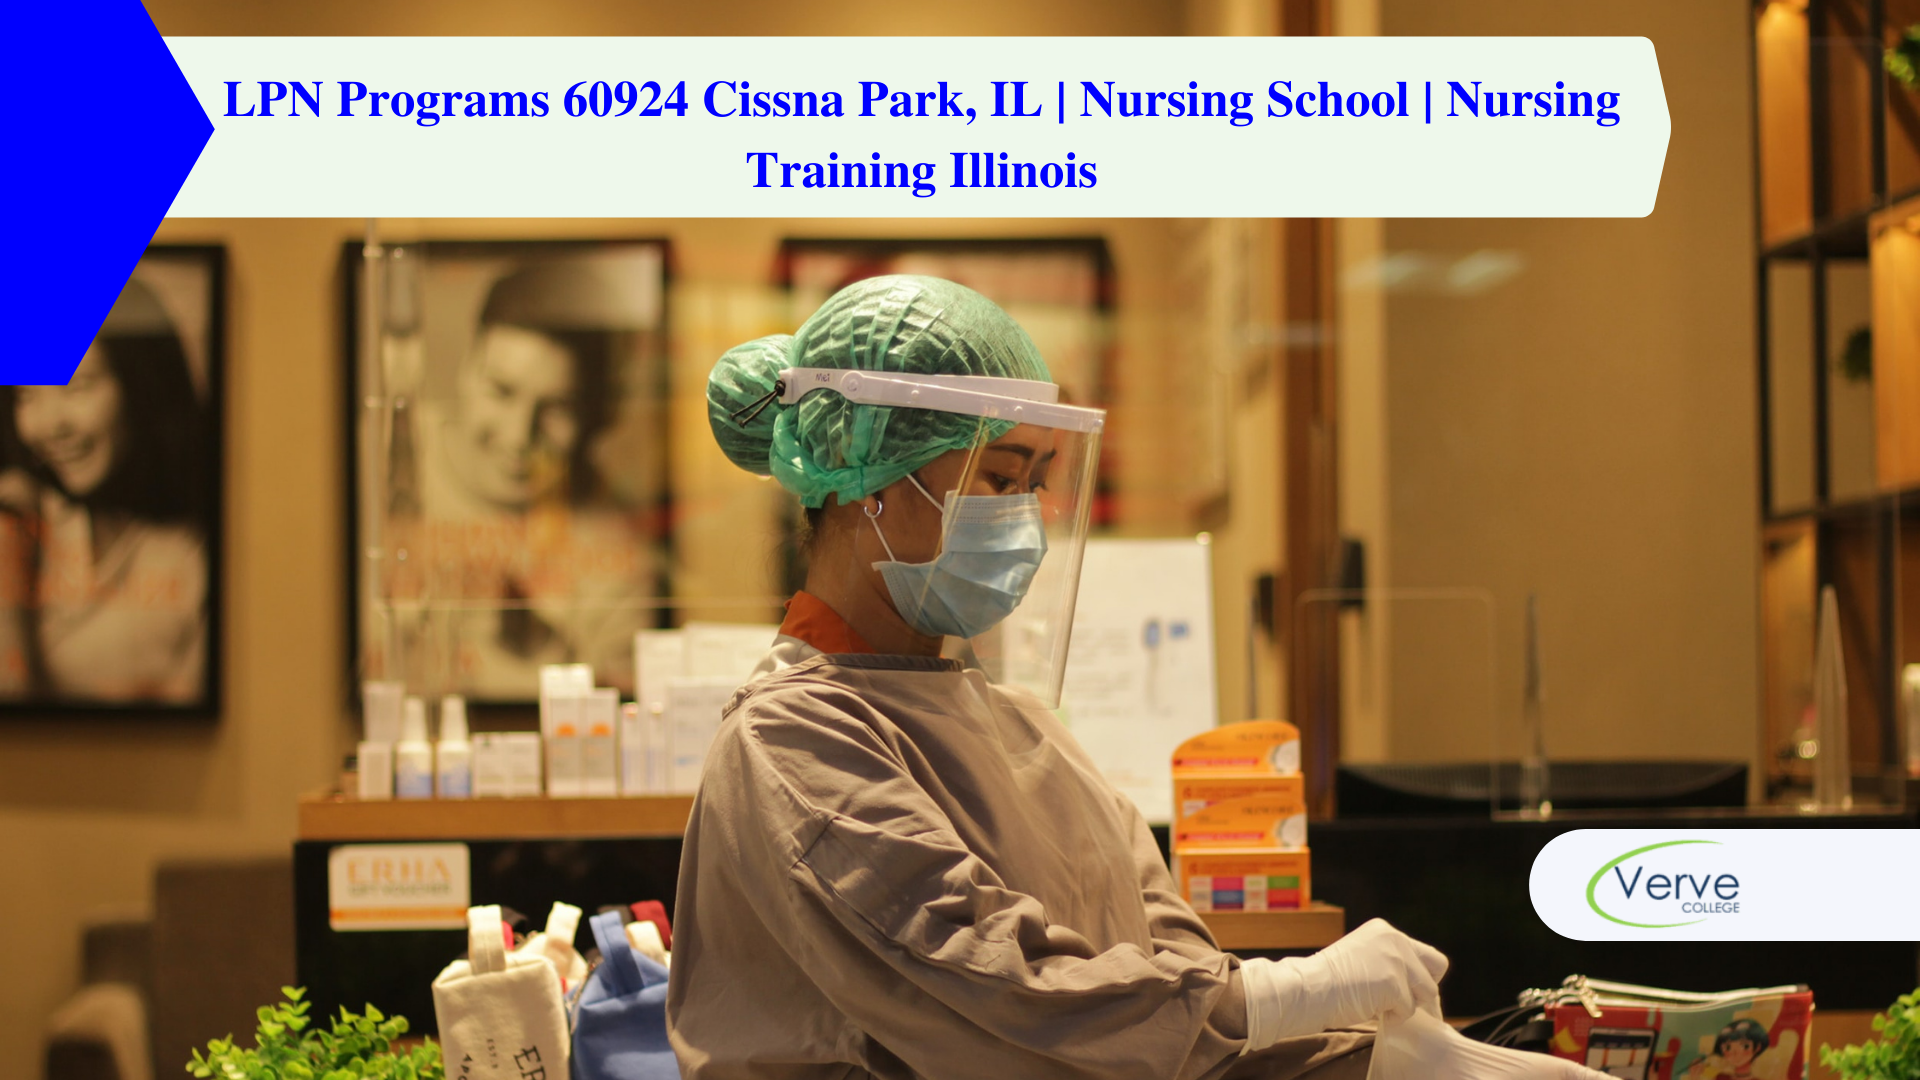 LPN Programs 60924 Cissna Park, IL | Nursing School | Nursing Training Illinois